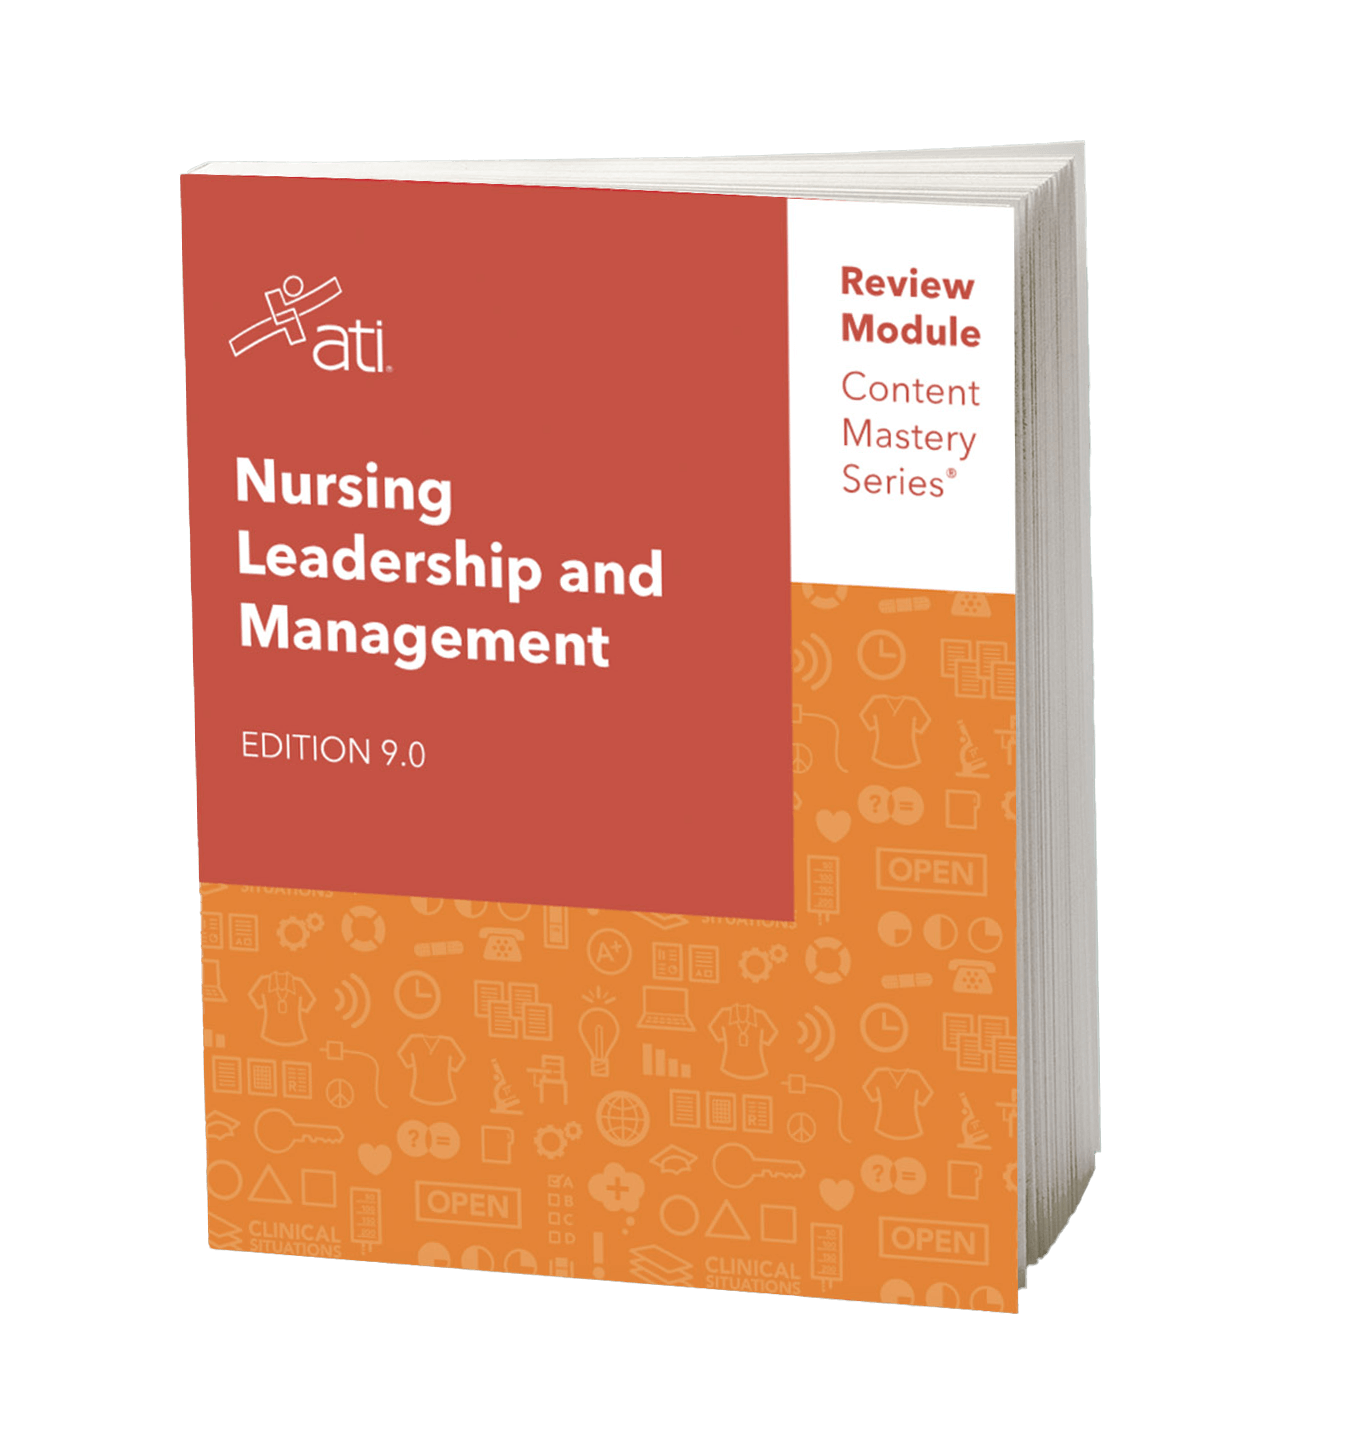 Nursing Leadership & Management Review Module